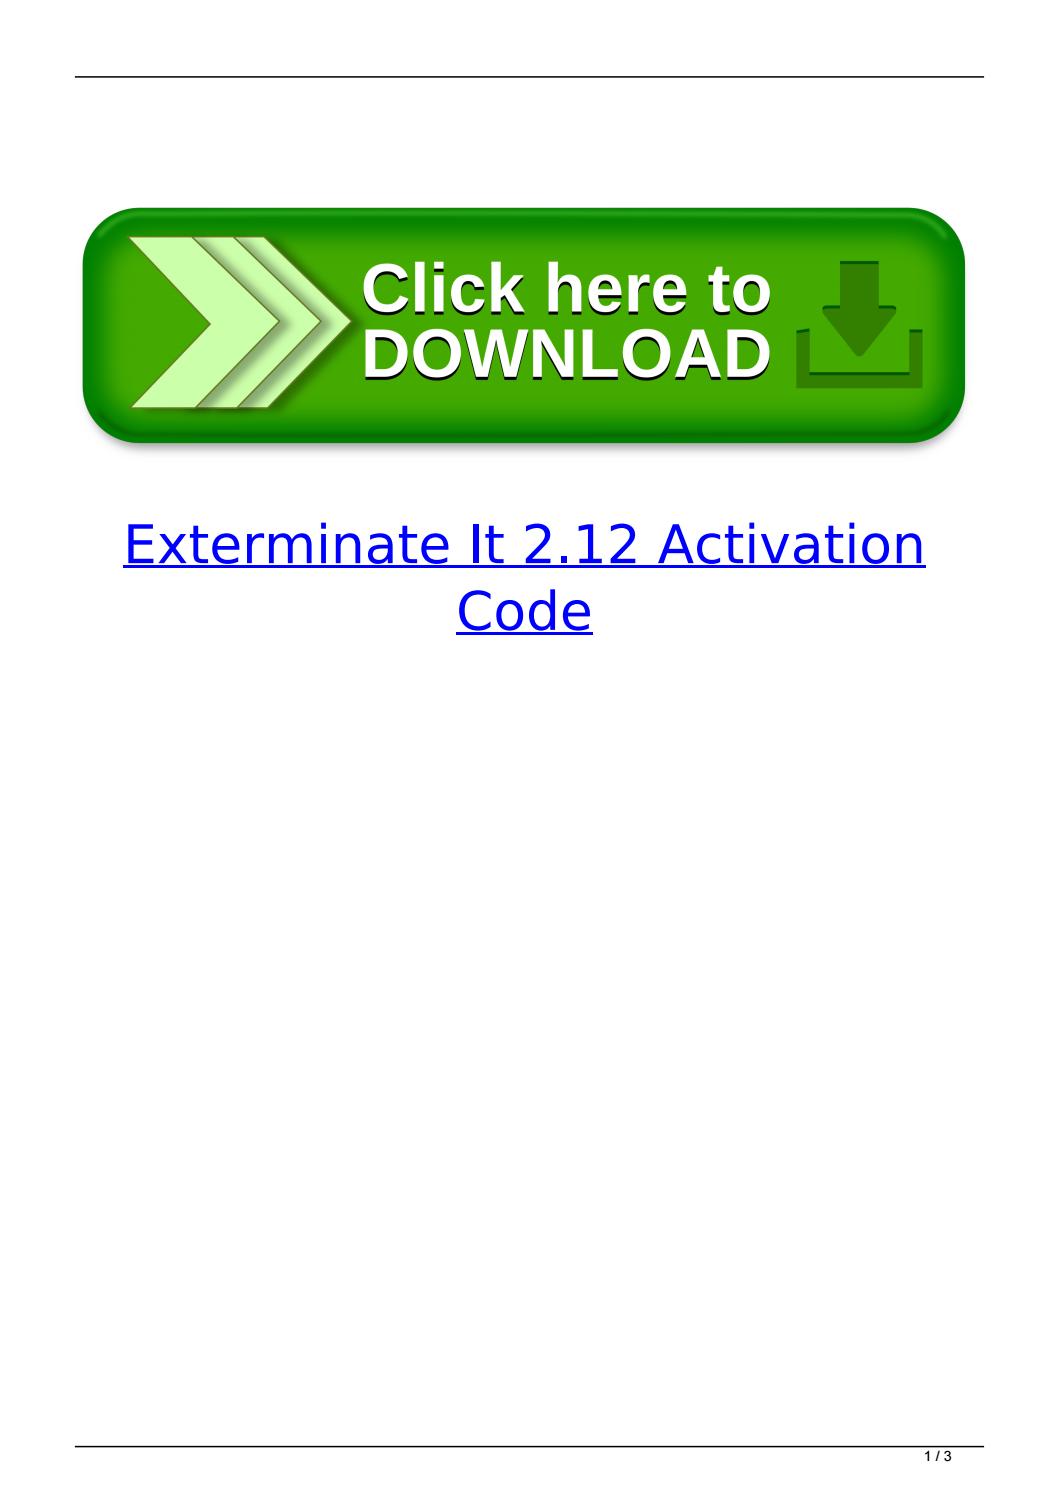 exterminate it activation code